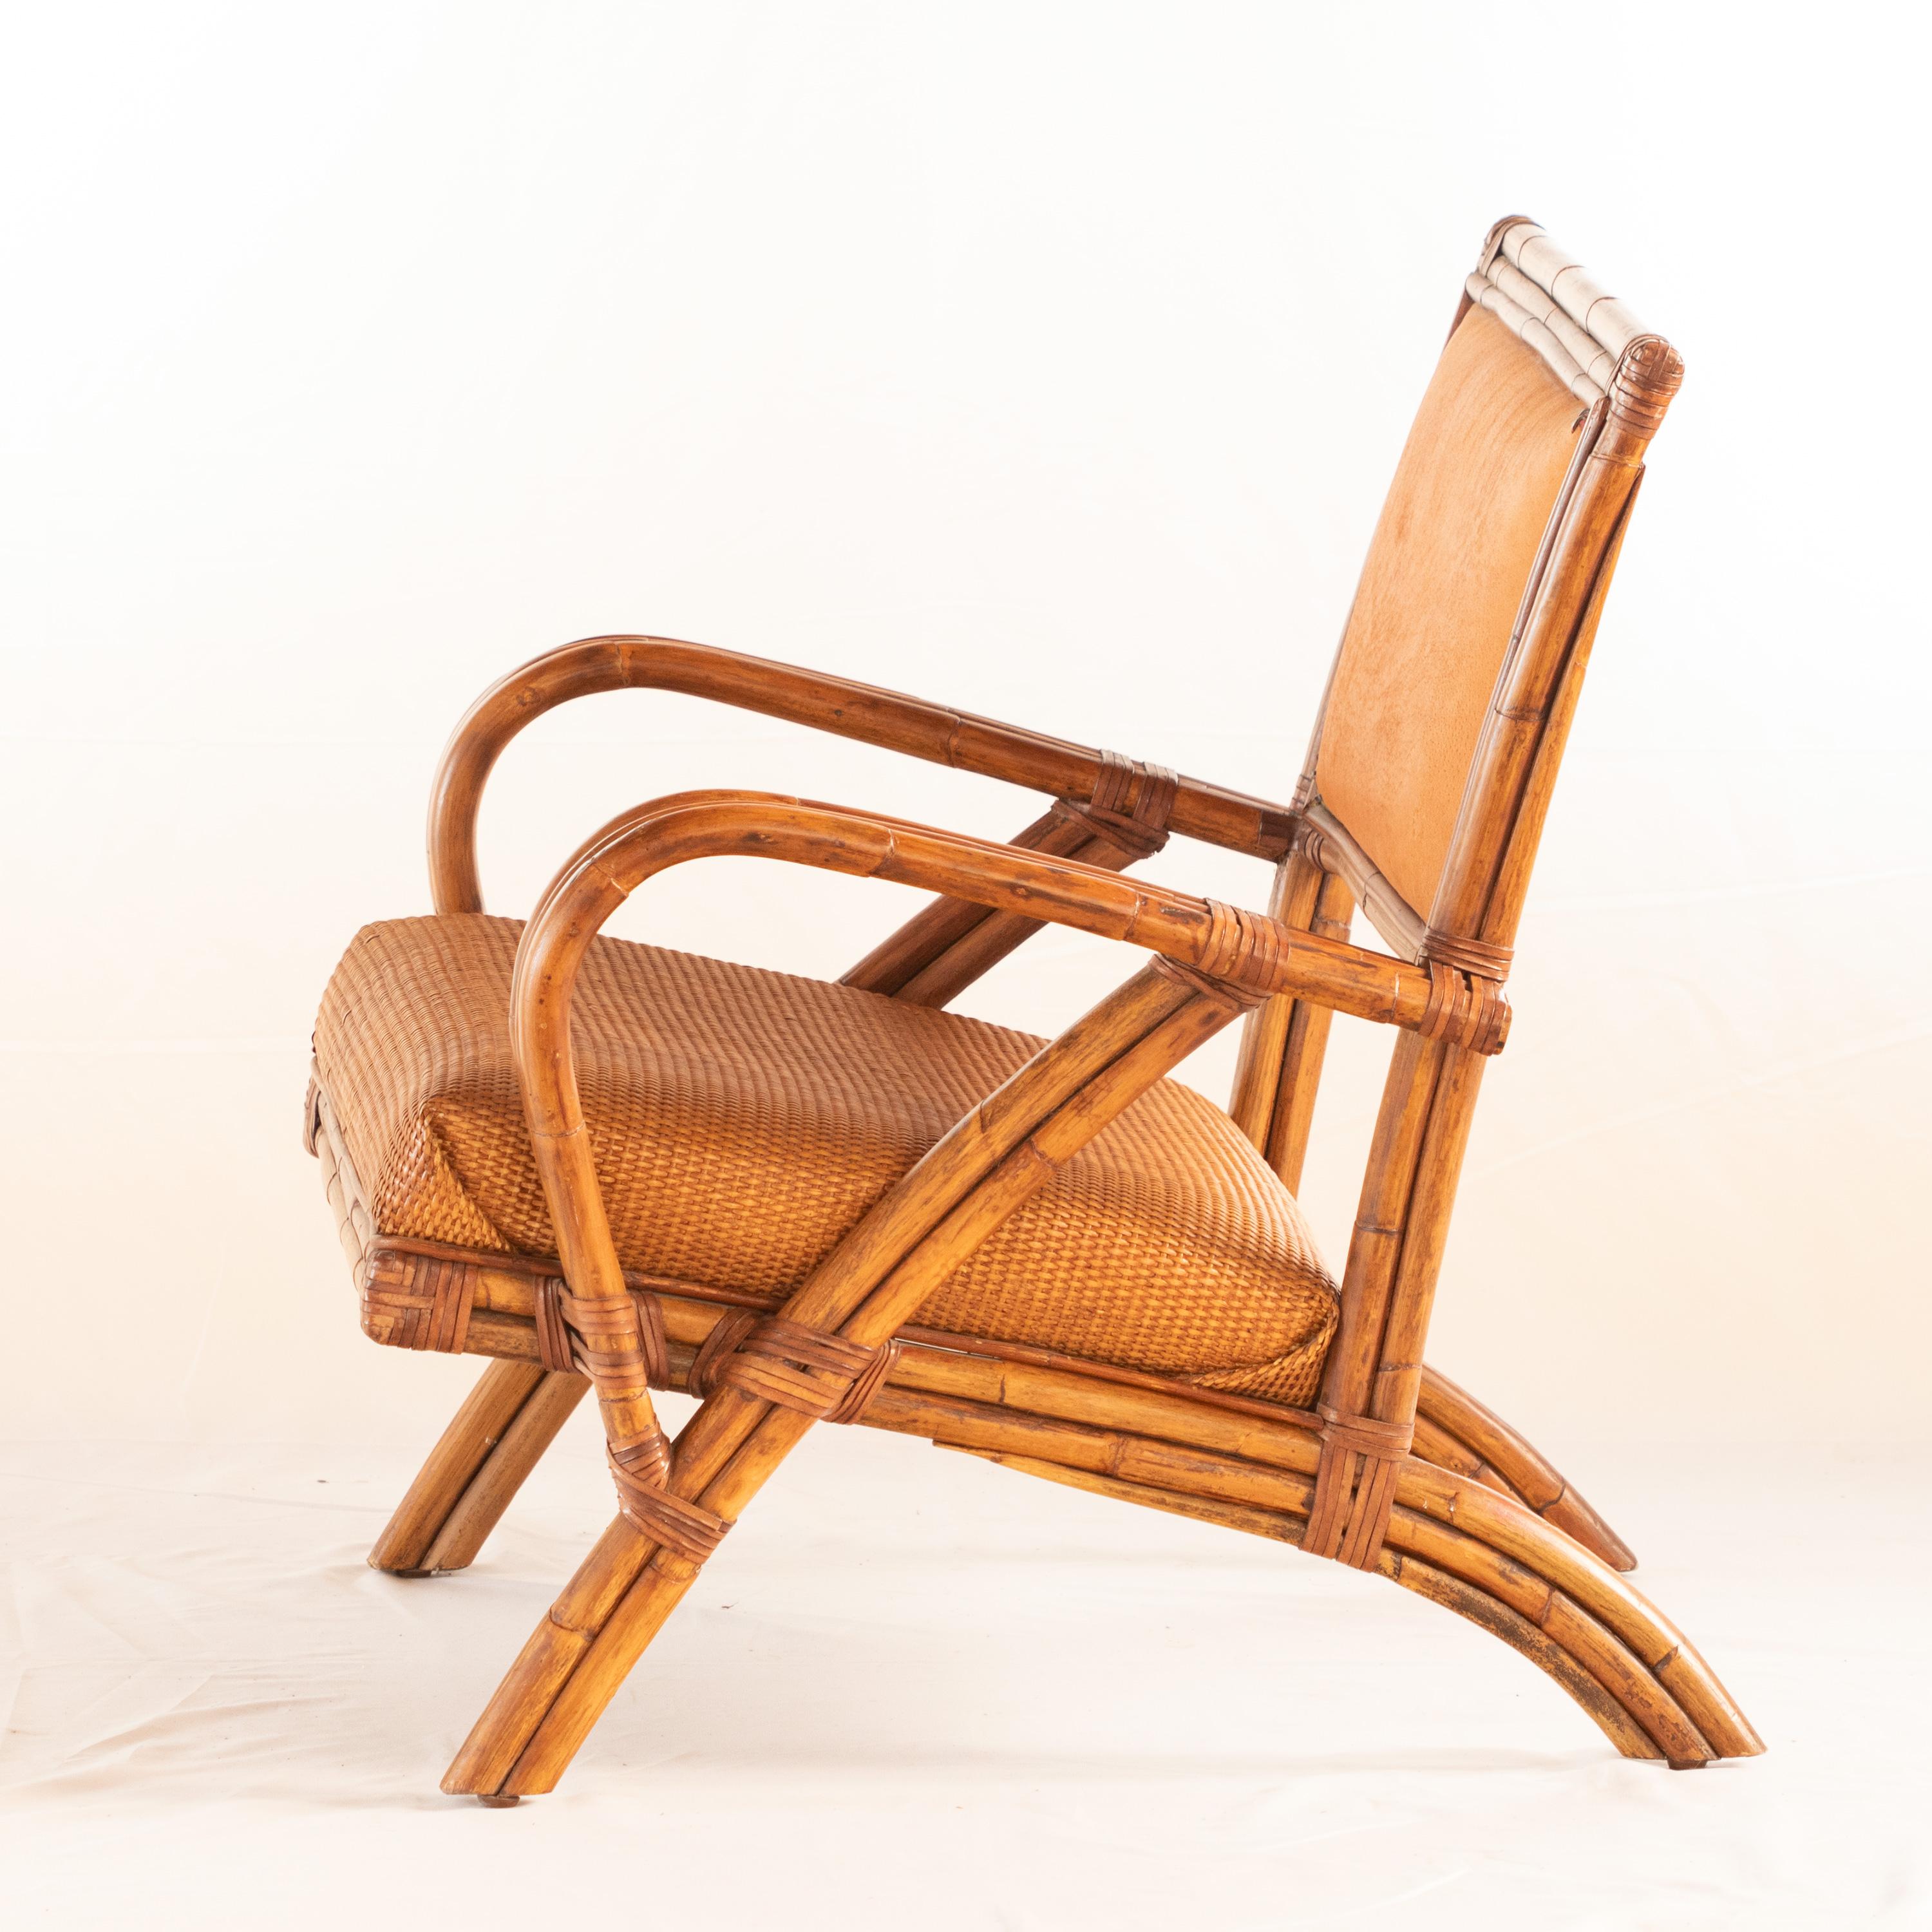 Late 20th Century Rattan Split Chair Wood Confortable Modern Asian Modern Kalma Furniture For Sale